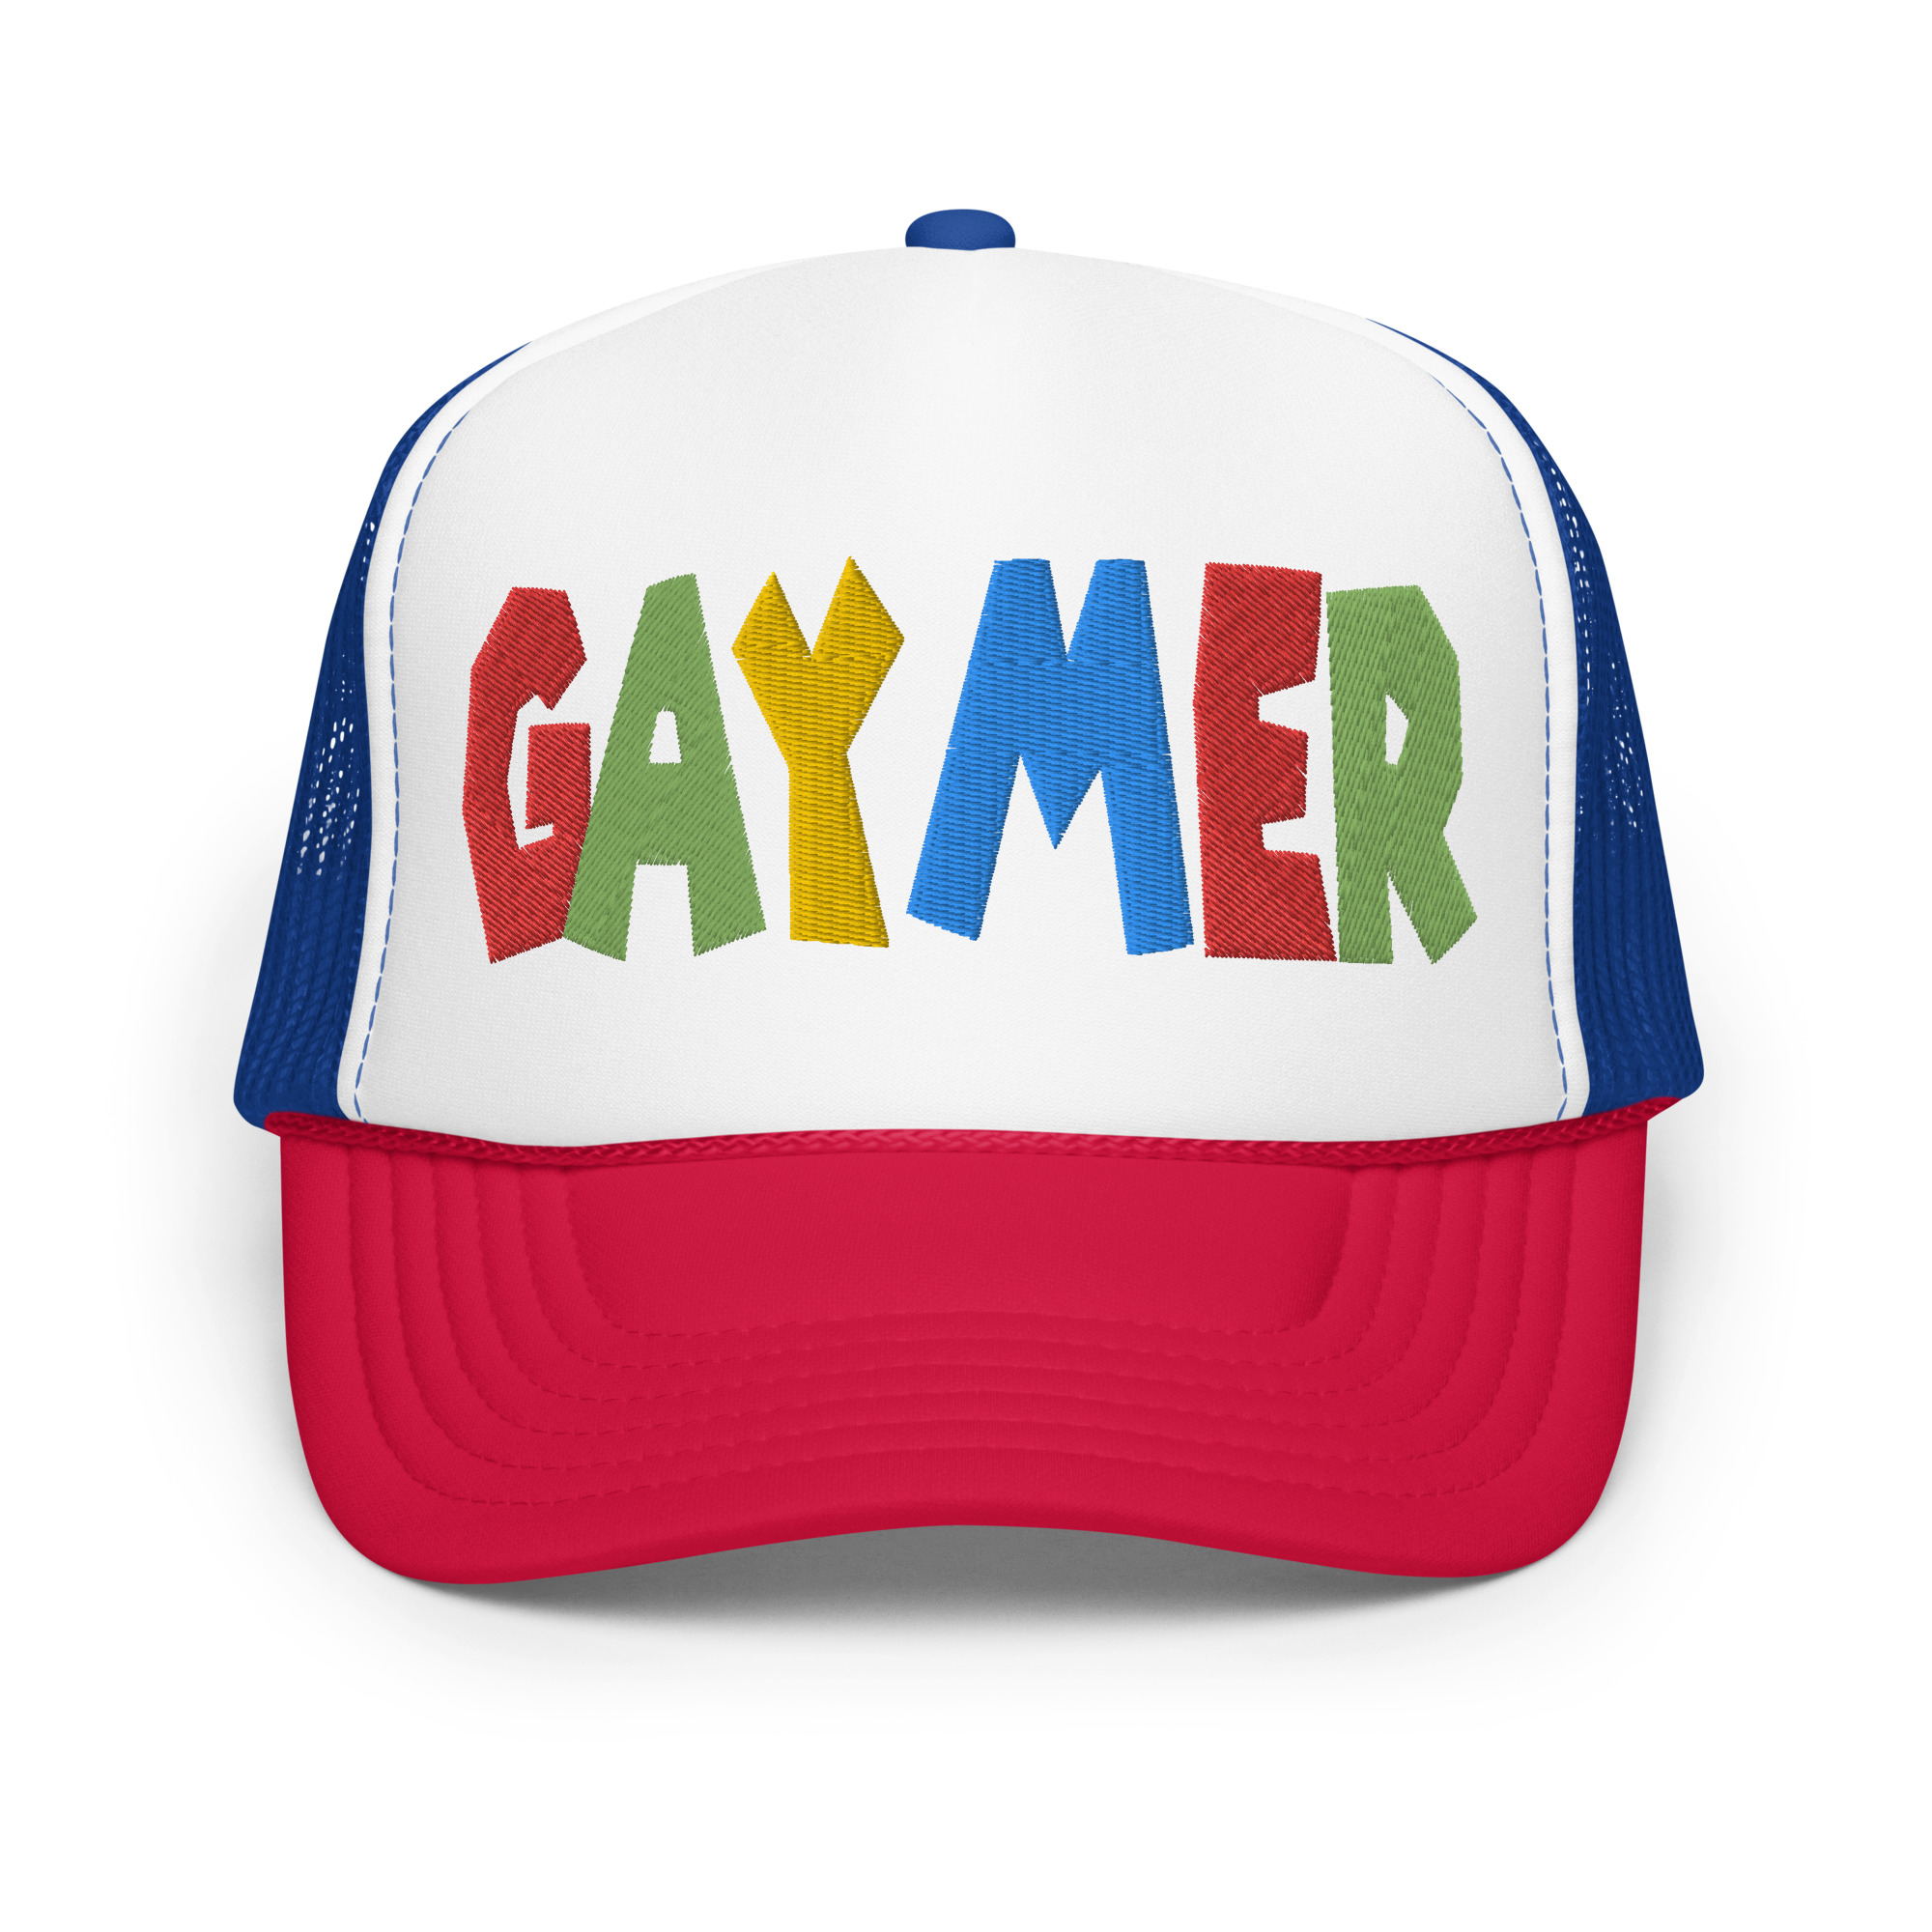 Featured image for “GAYMER - Foam trucker hat”